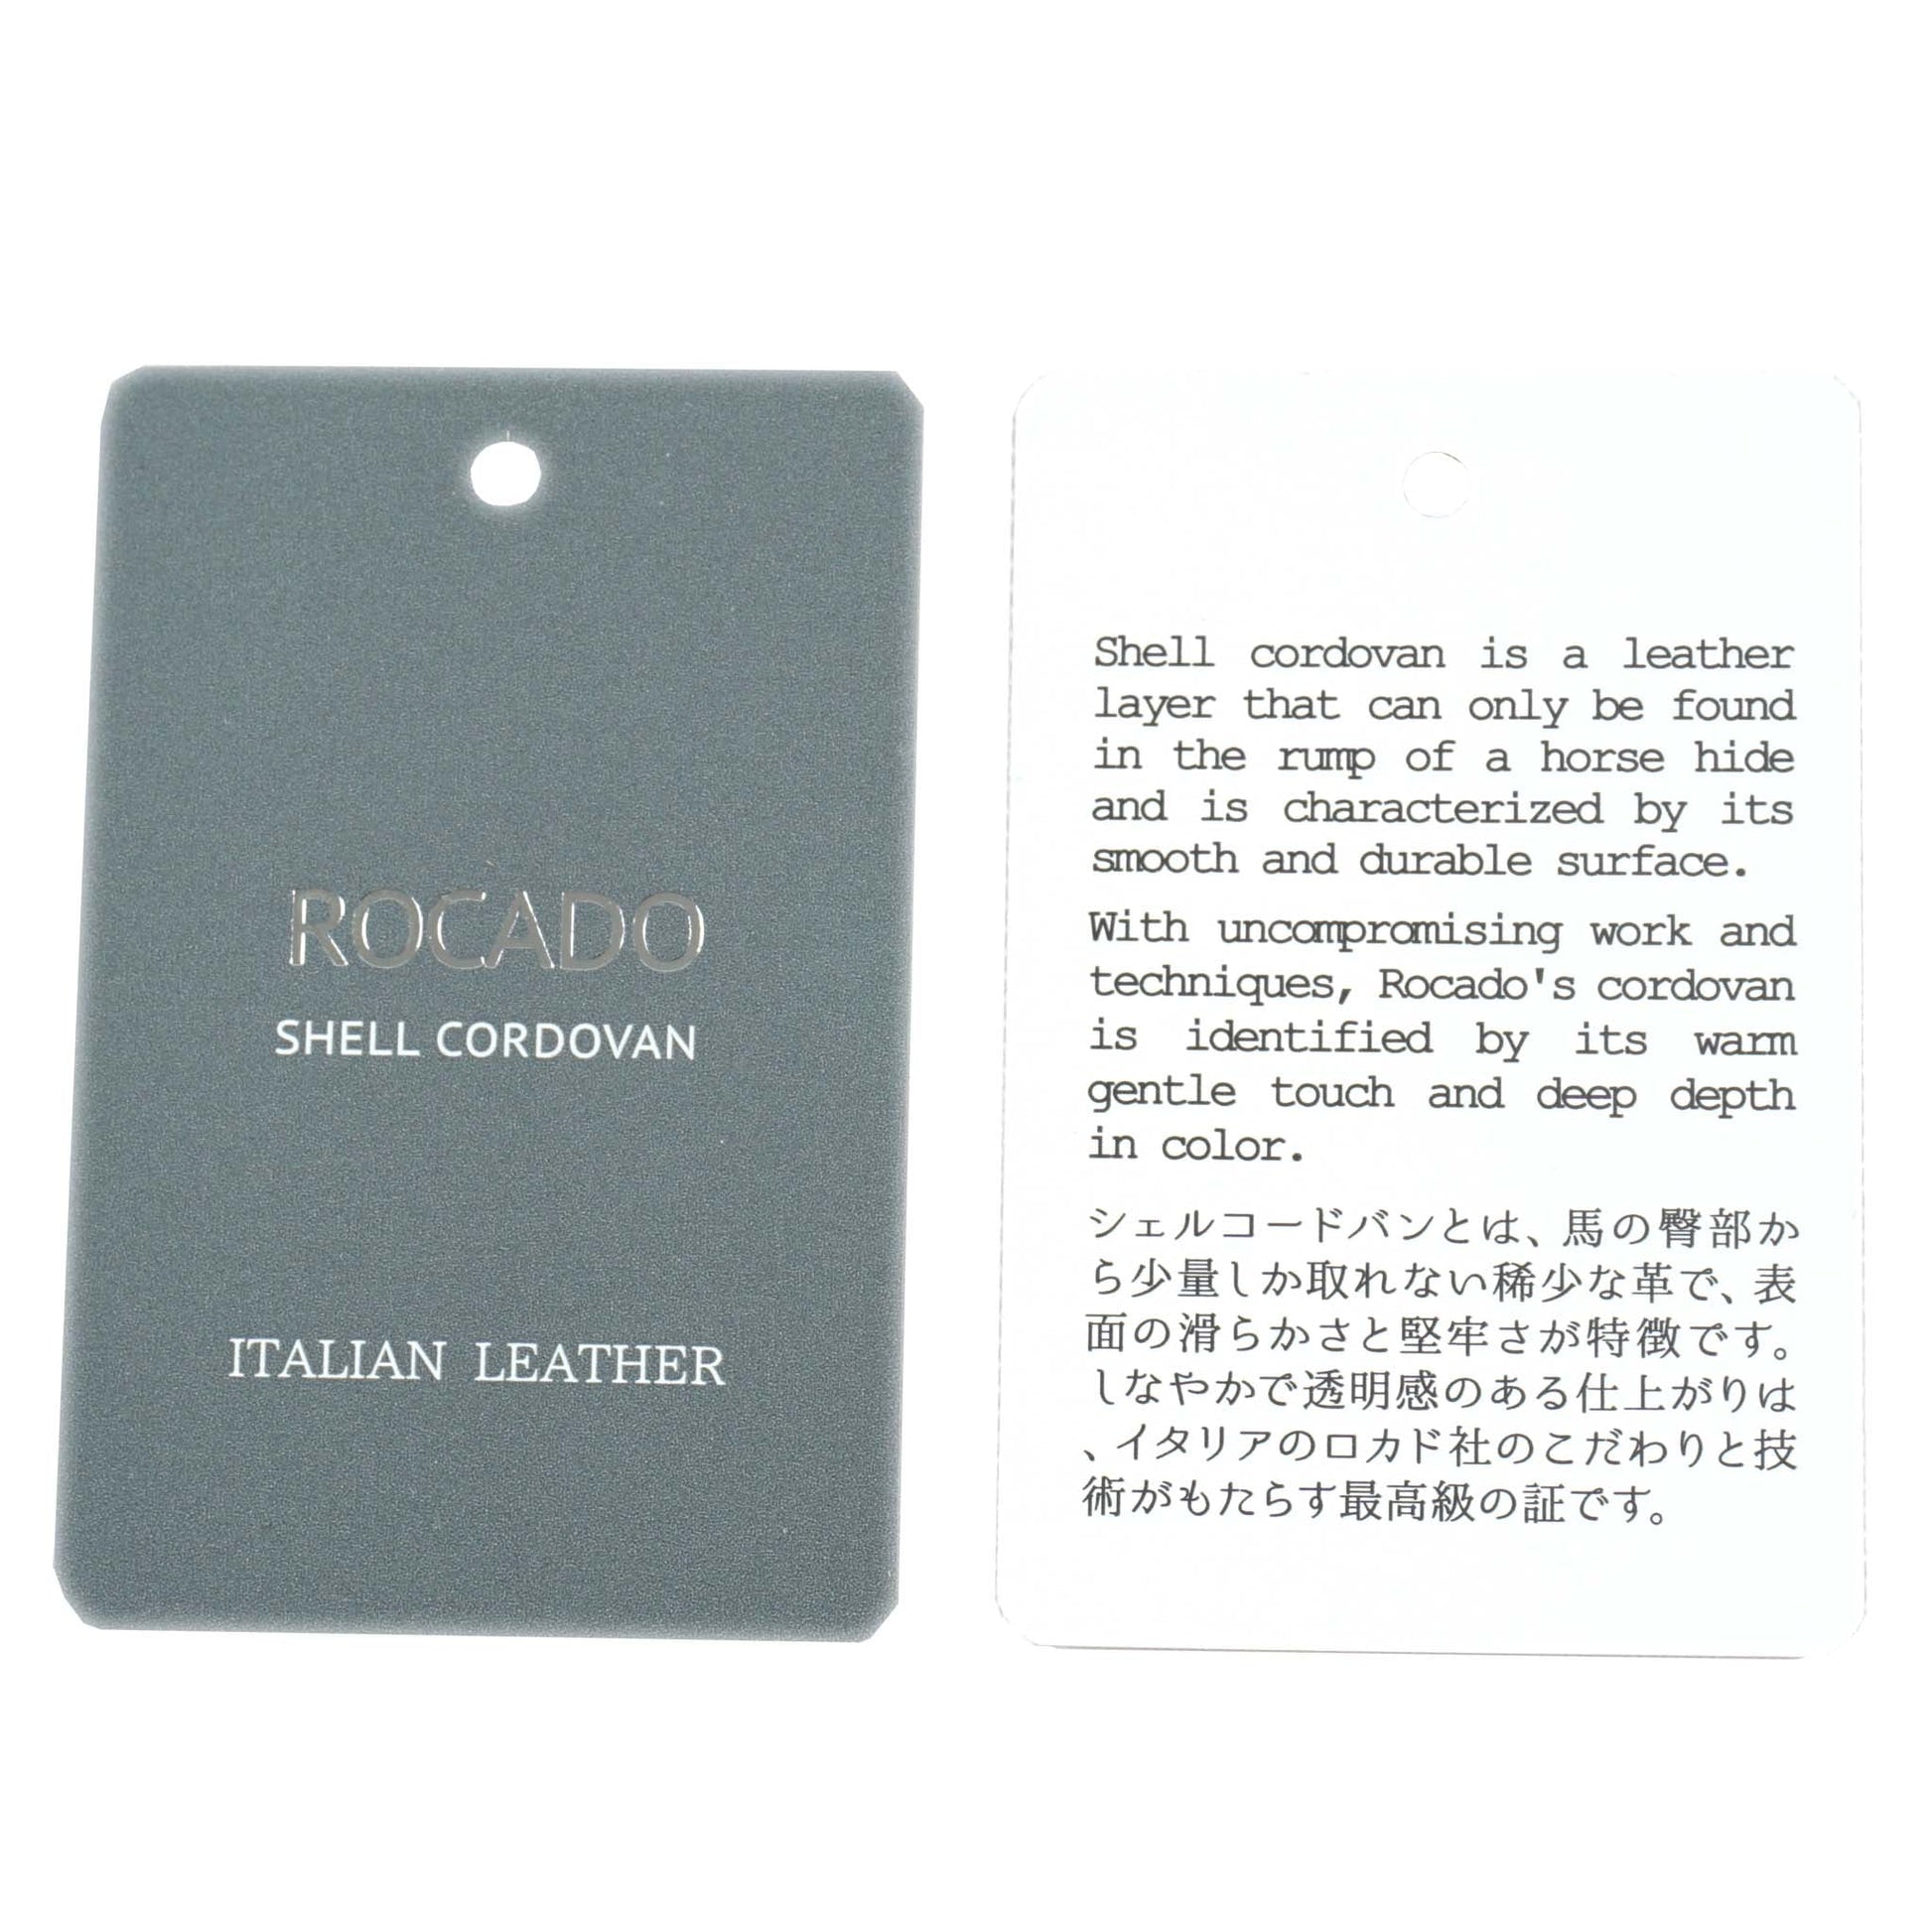 Rocado tag to certify its shell cordovan